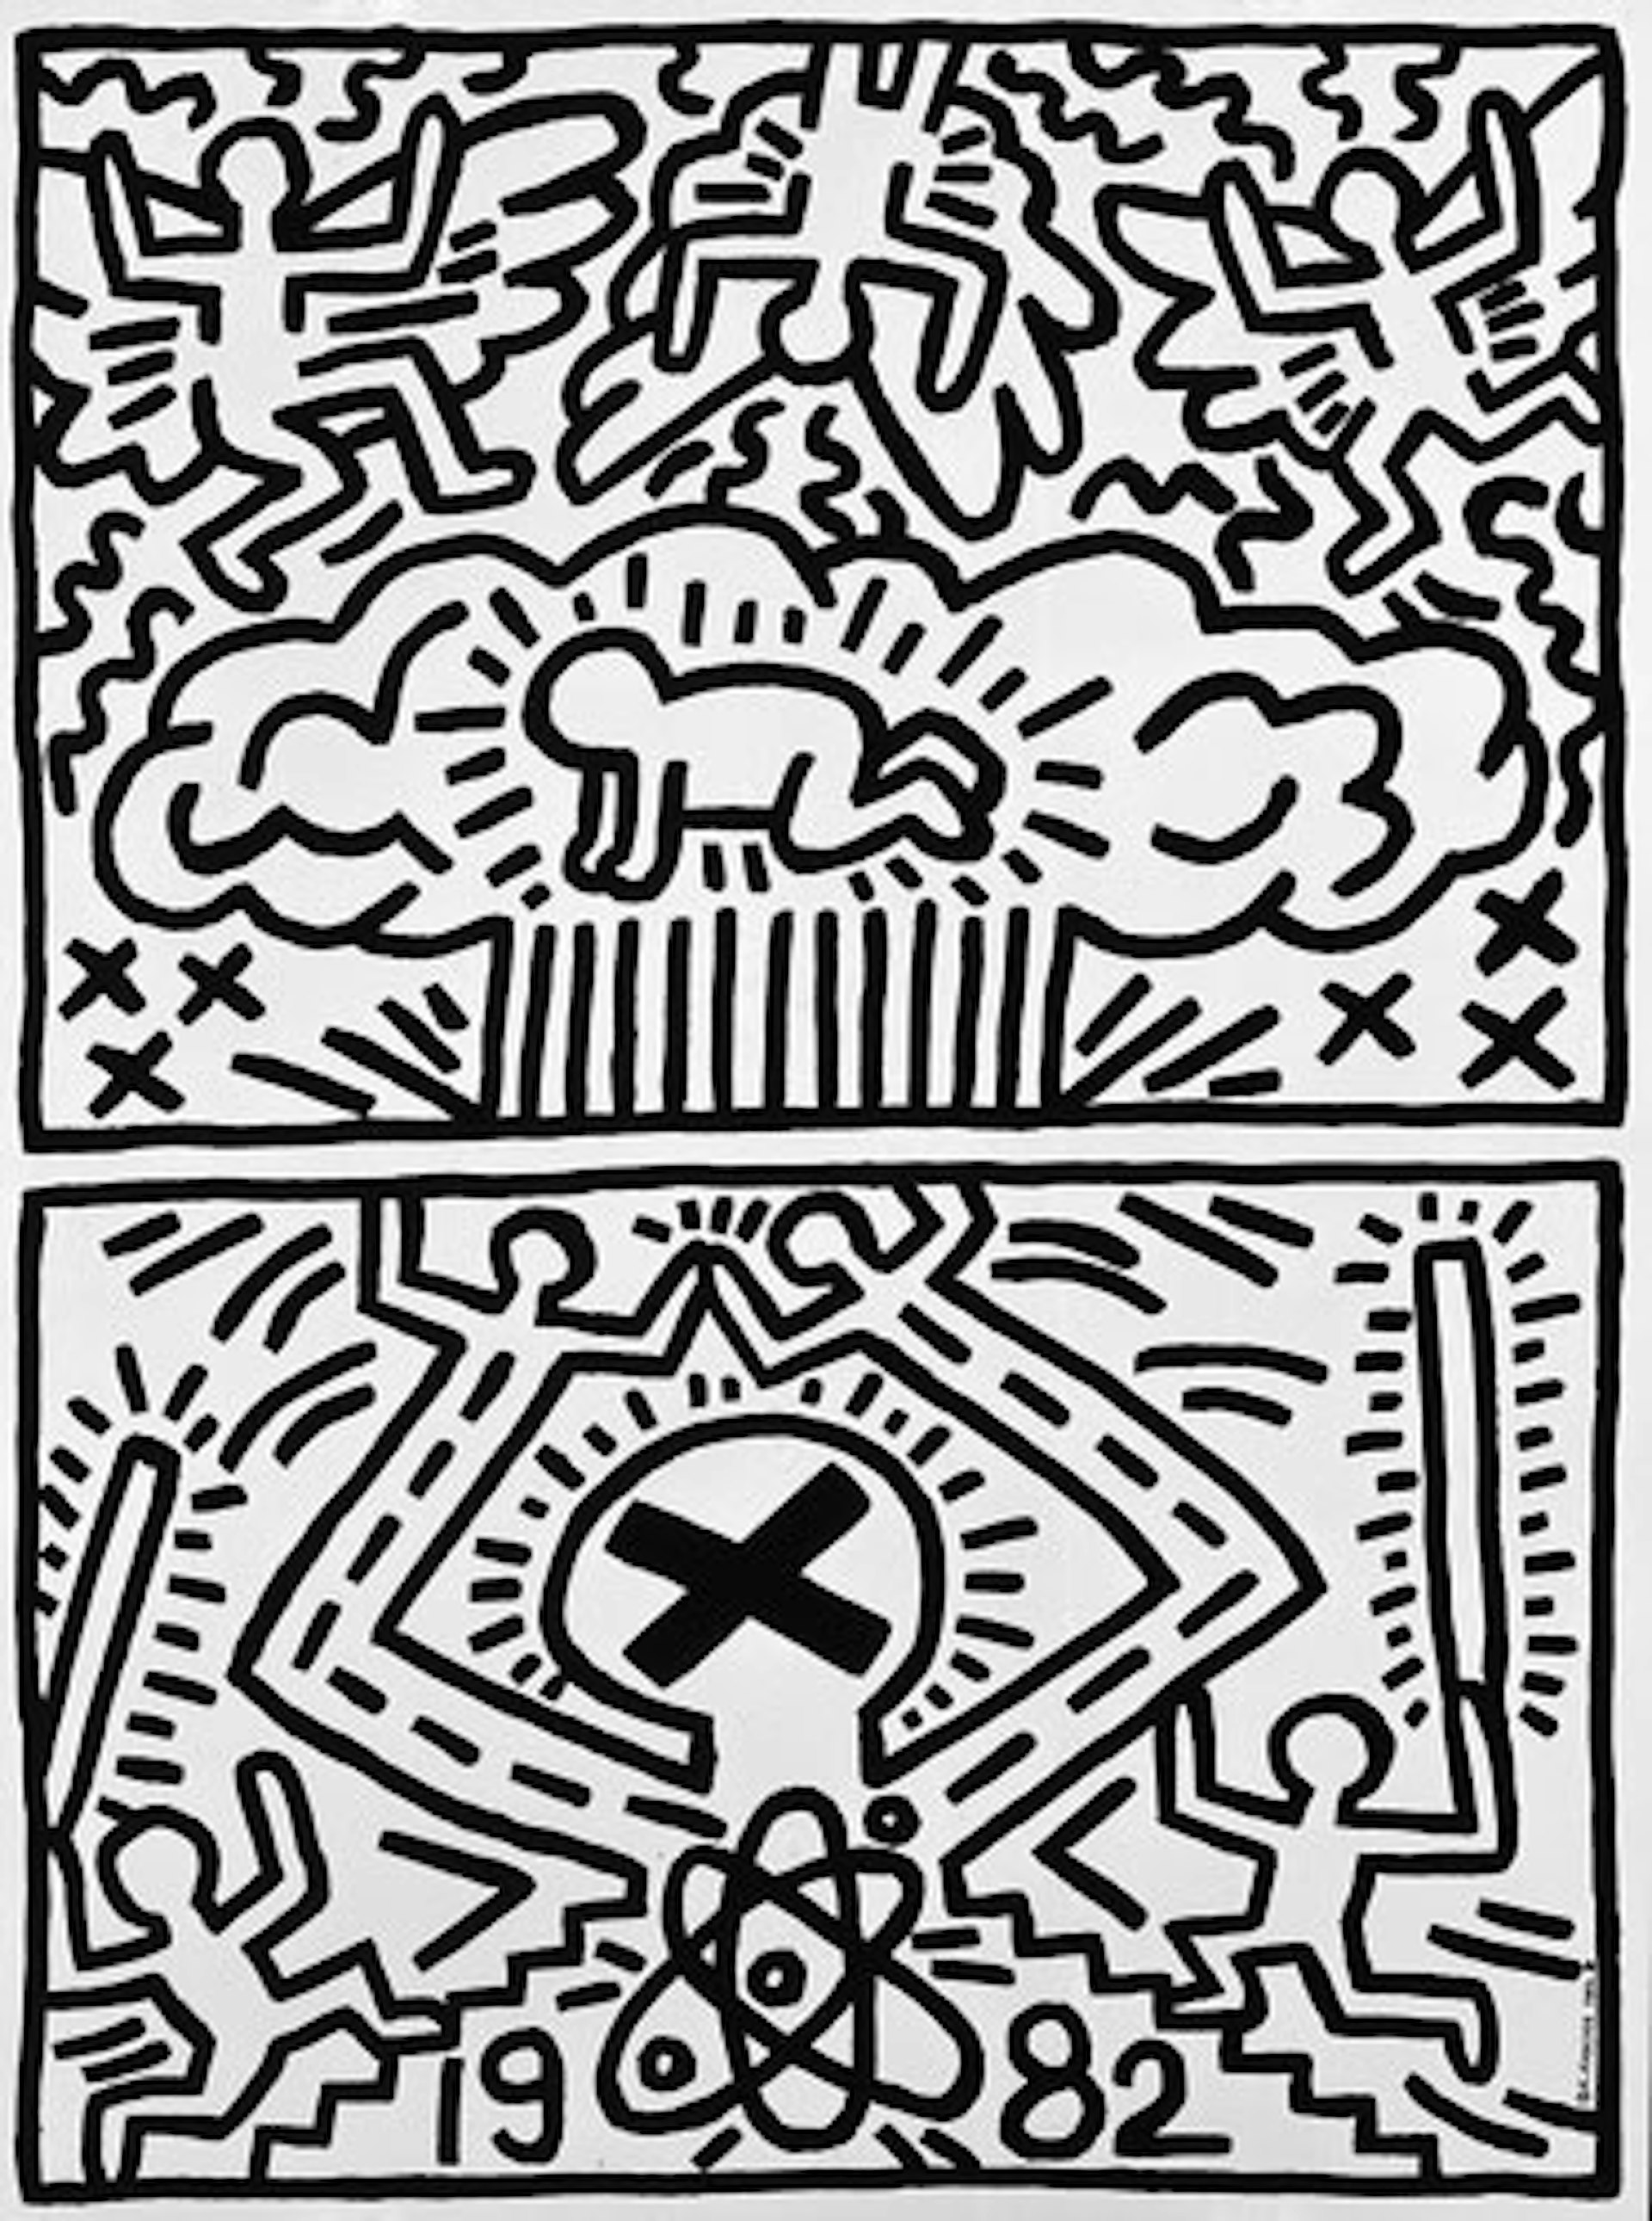 Keith Haring radiantchrist_7